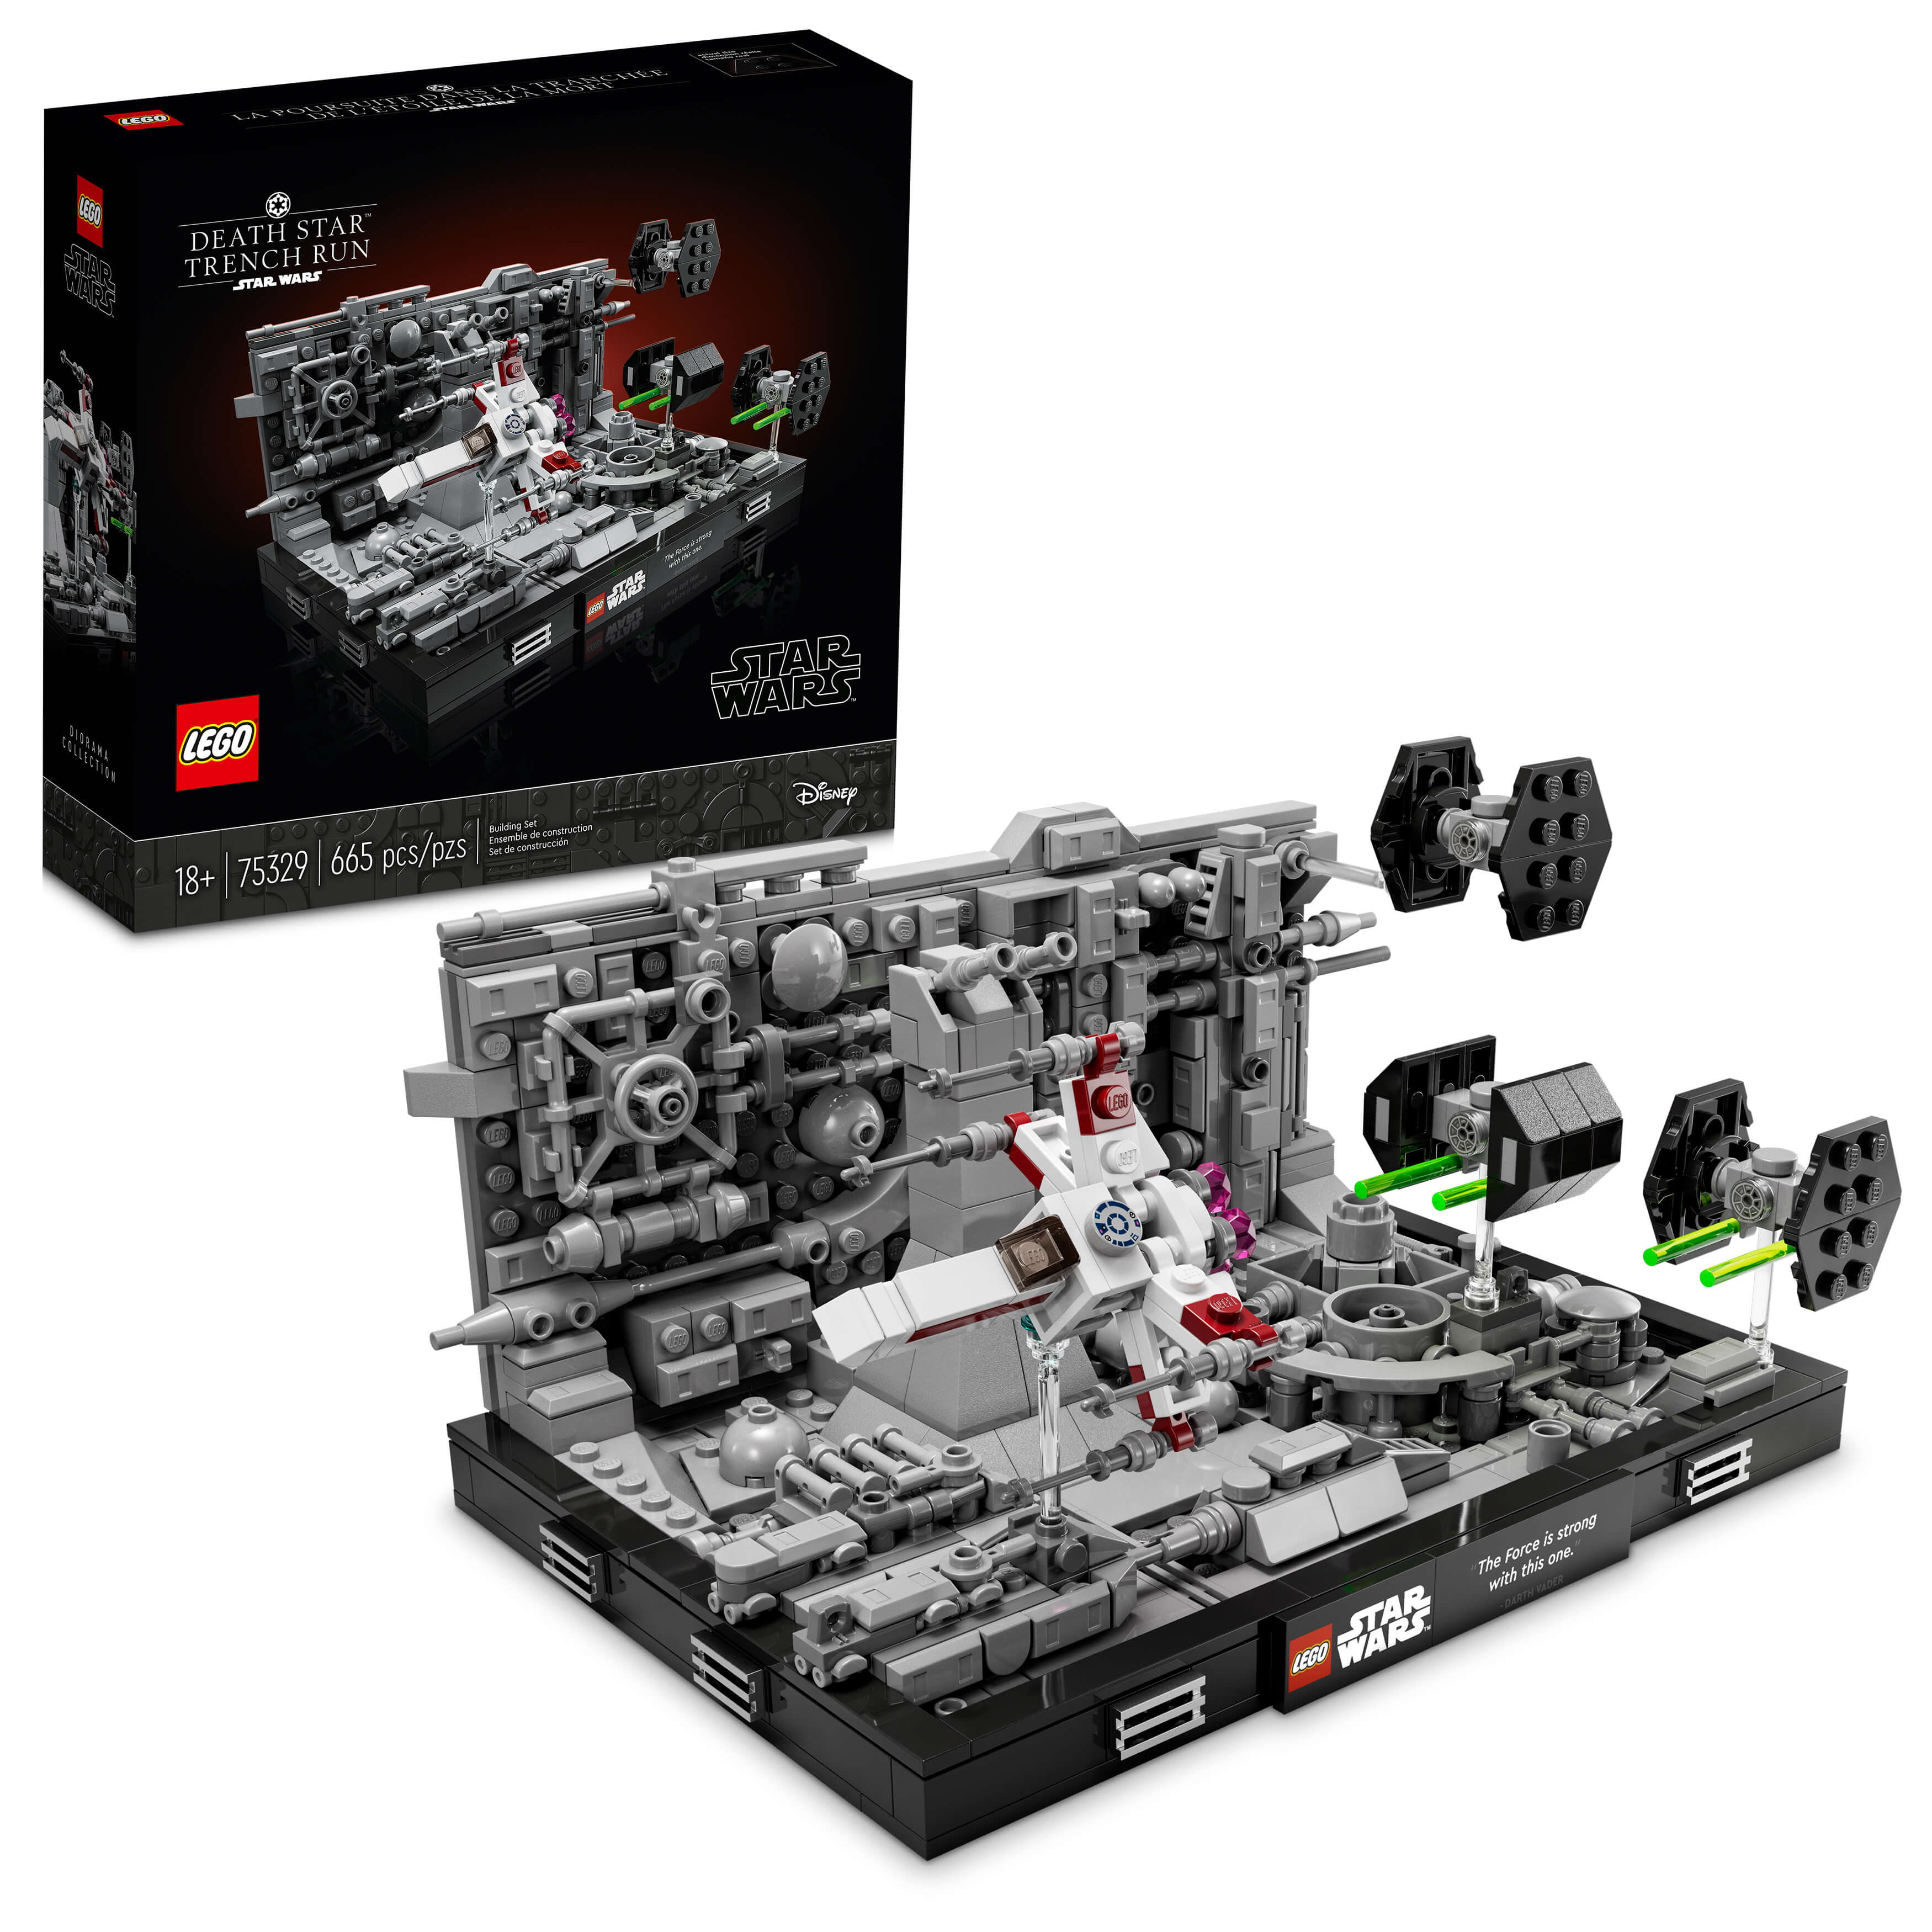 LEGO® Star Wars® Death Star Trench Run Diorama 75329 Building Kit (665 Pieces)